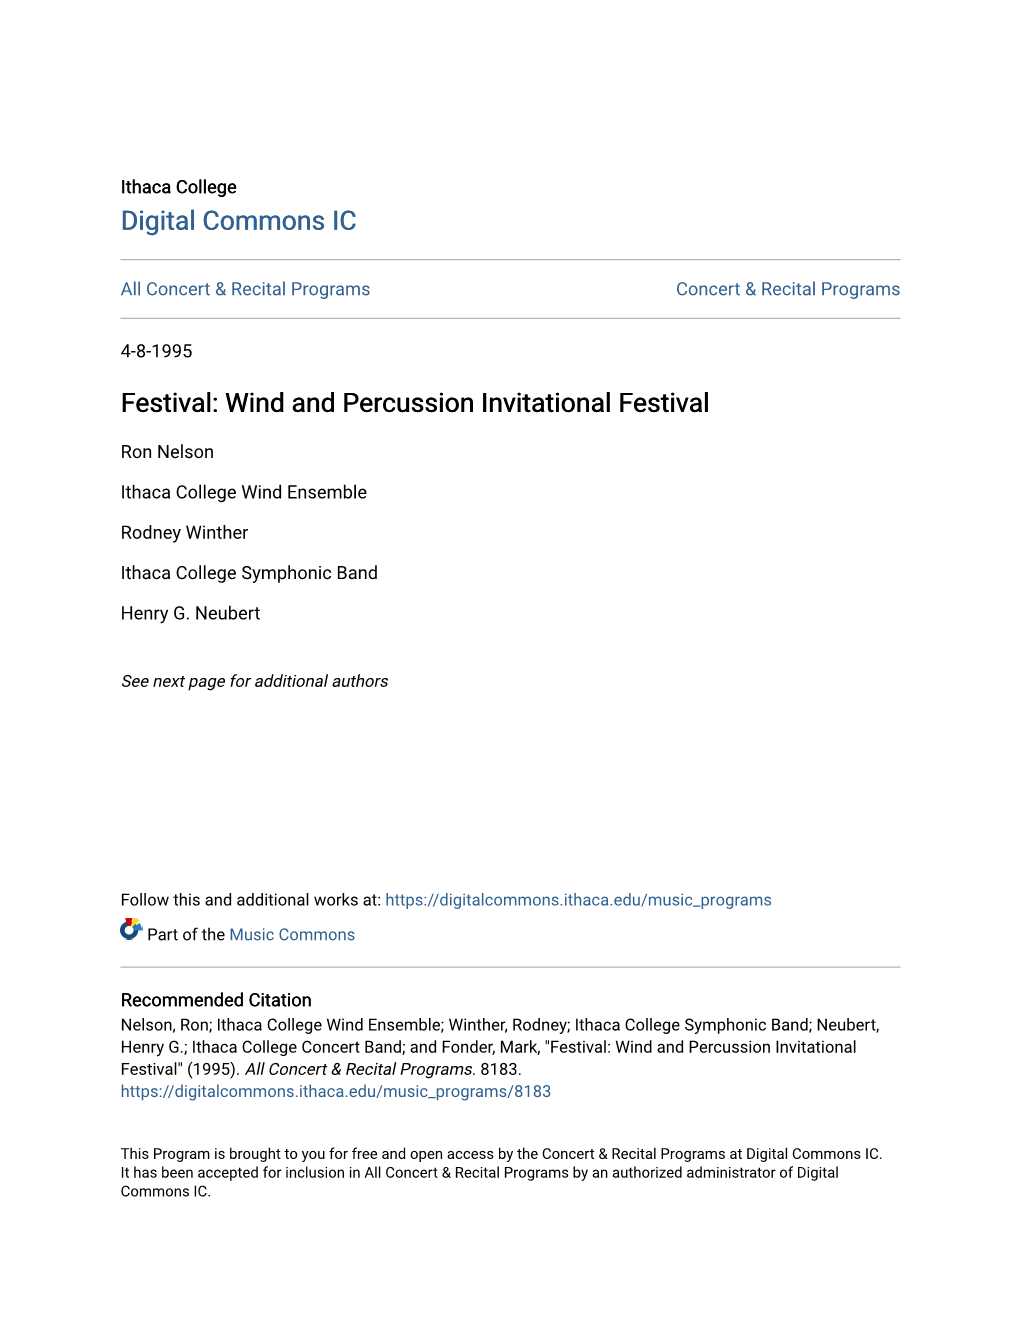 Wind and Percussion Invitational Festival